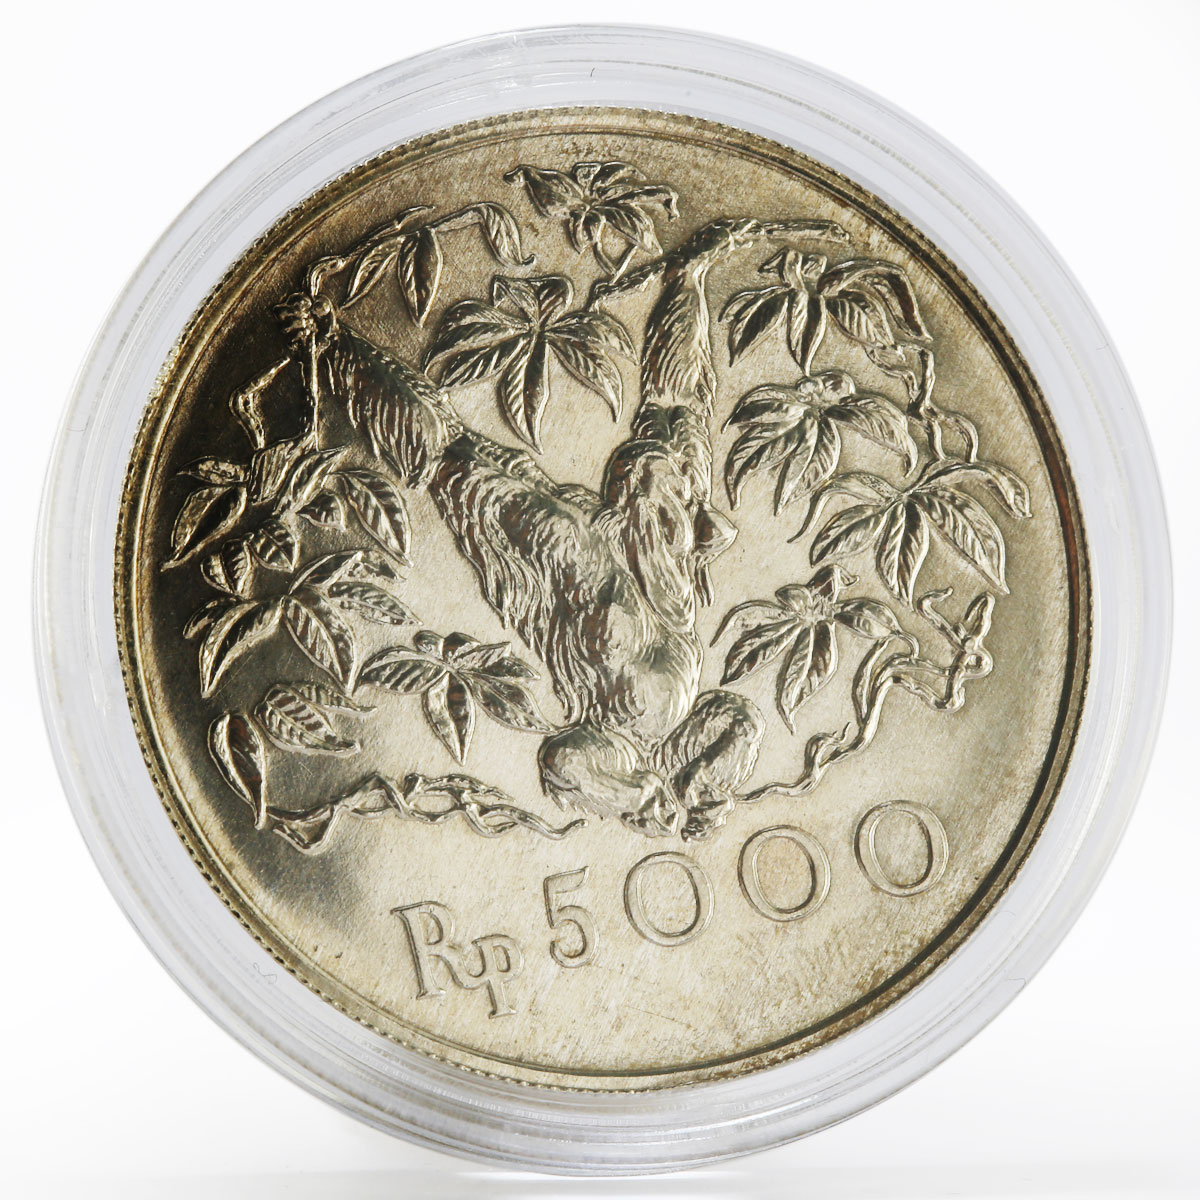 Indonesia 5000 rupiah Animal series Orangutan  silver coin 1974